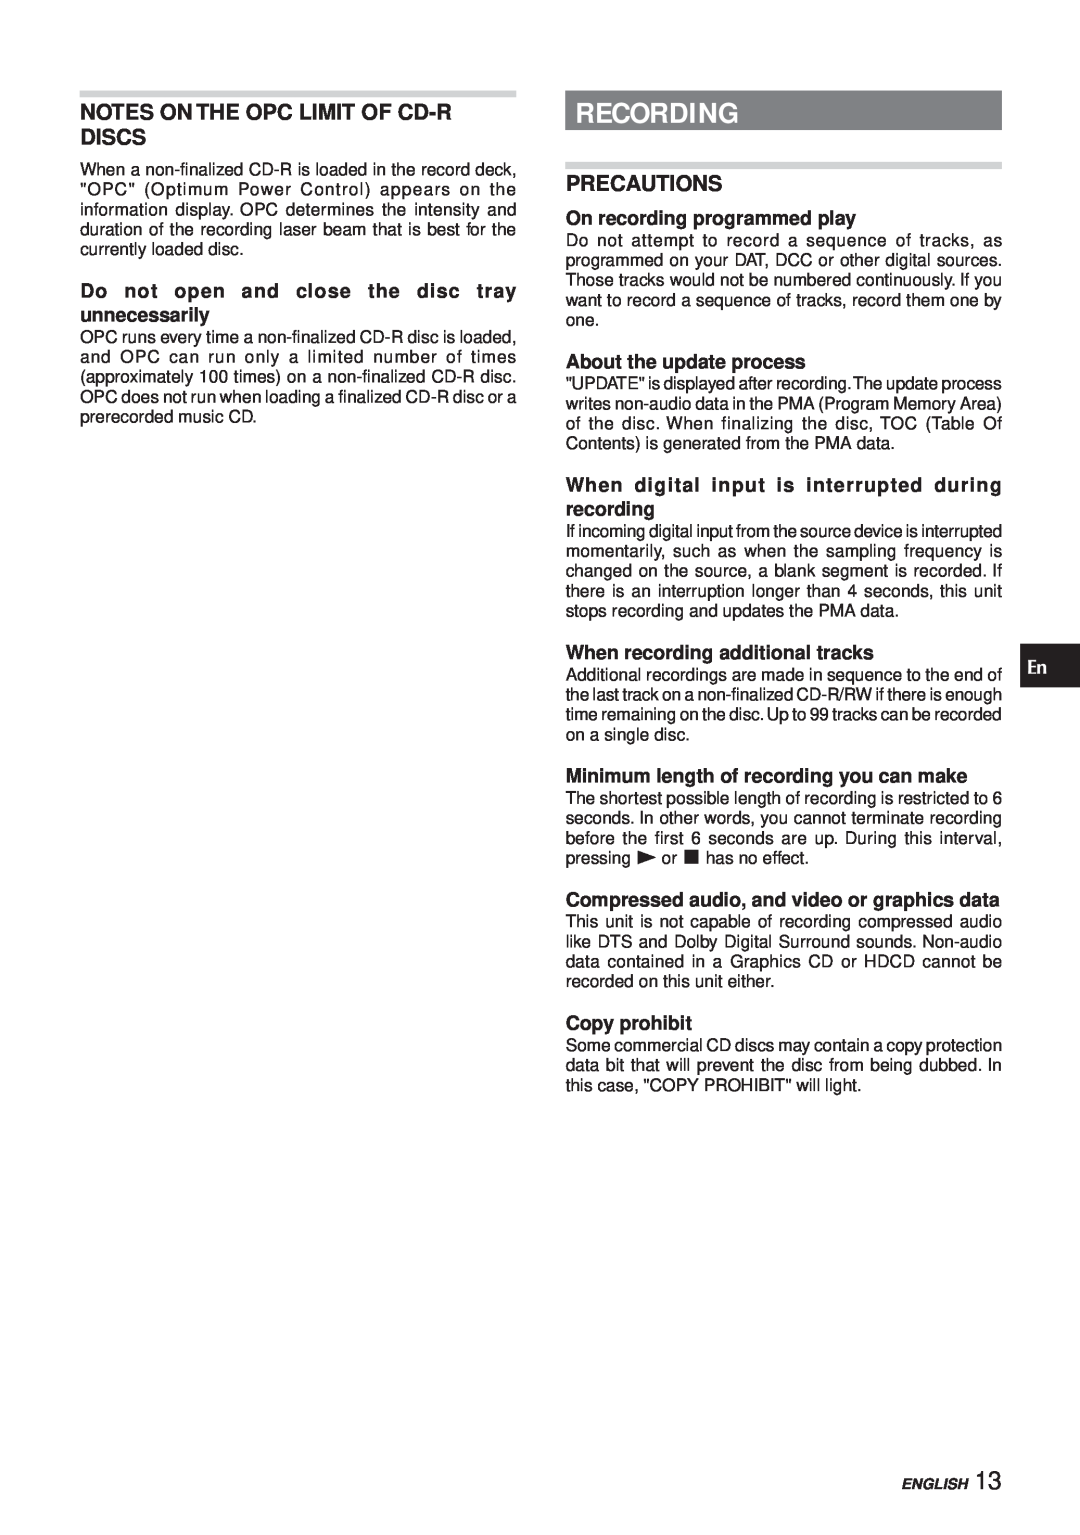 Aiwa XC-RW700 manual Recording, Notes On The Opc Limit Of Cd-Rdiscs, Precautions 